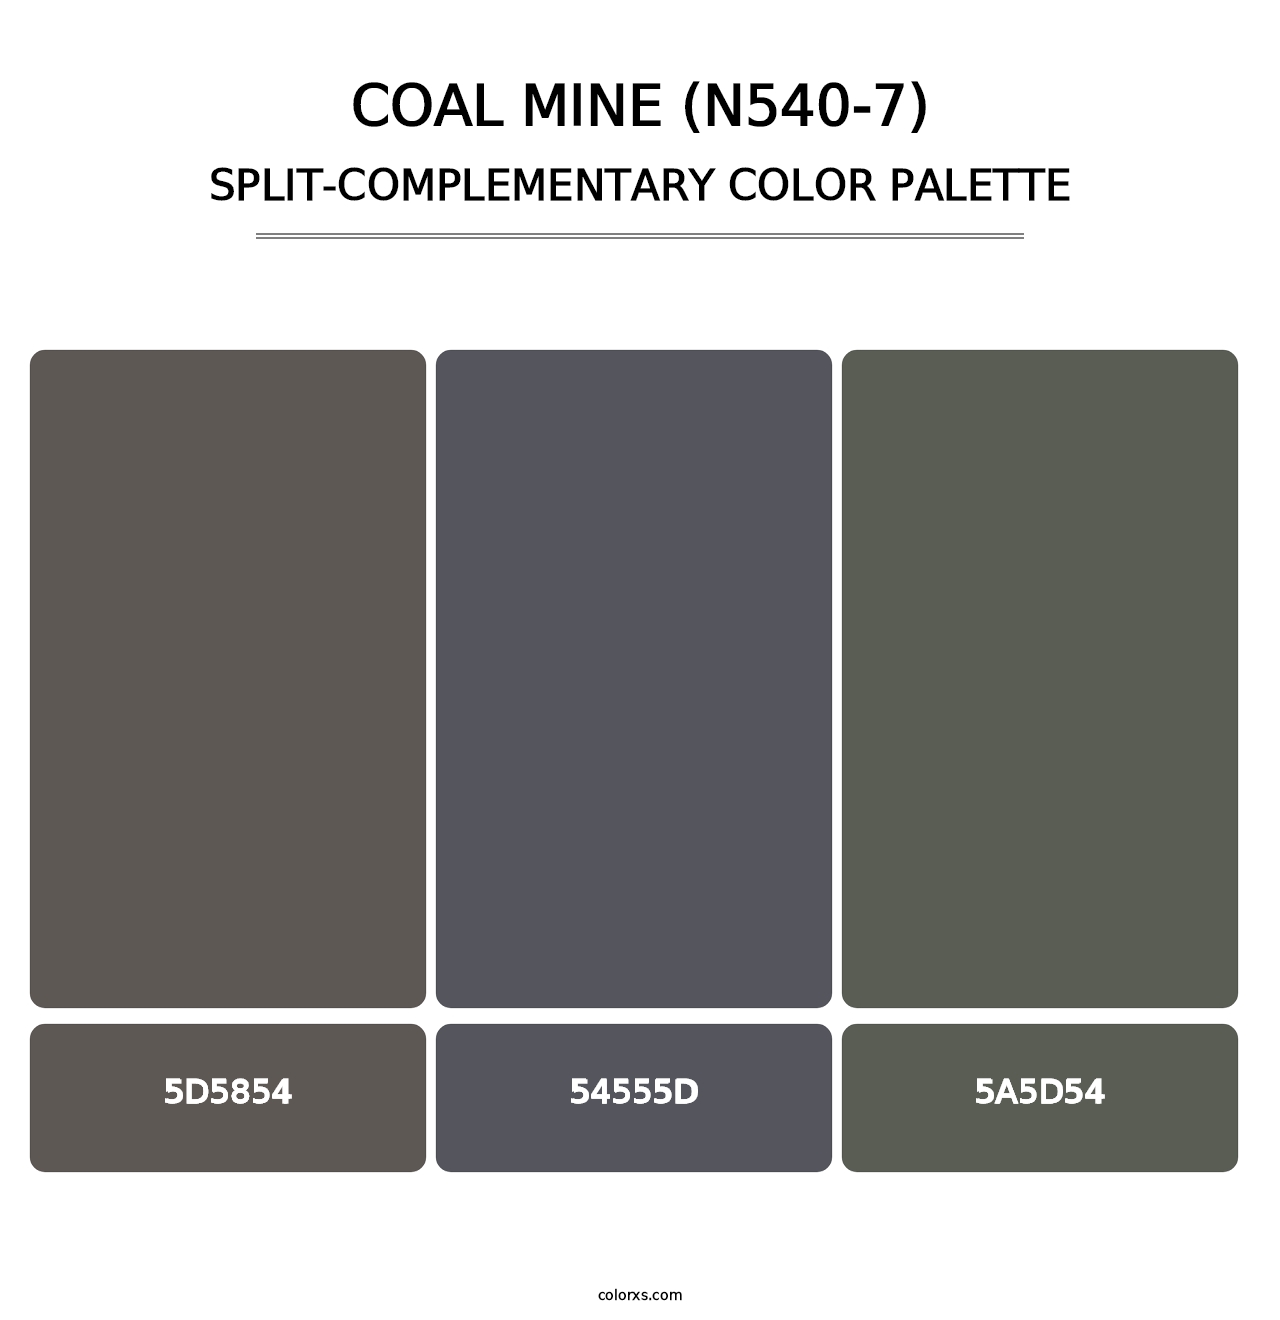 Coal Mine (N540-7) - Split-Complementary Color Palette